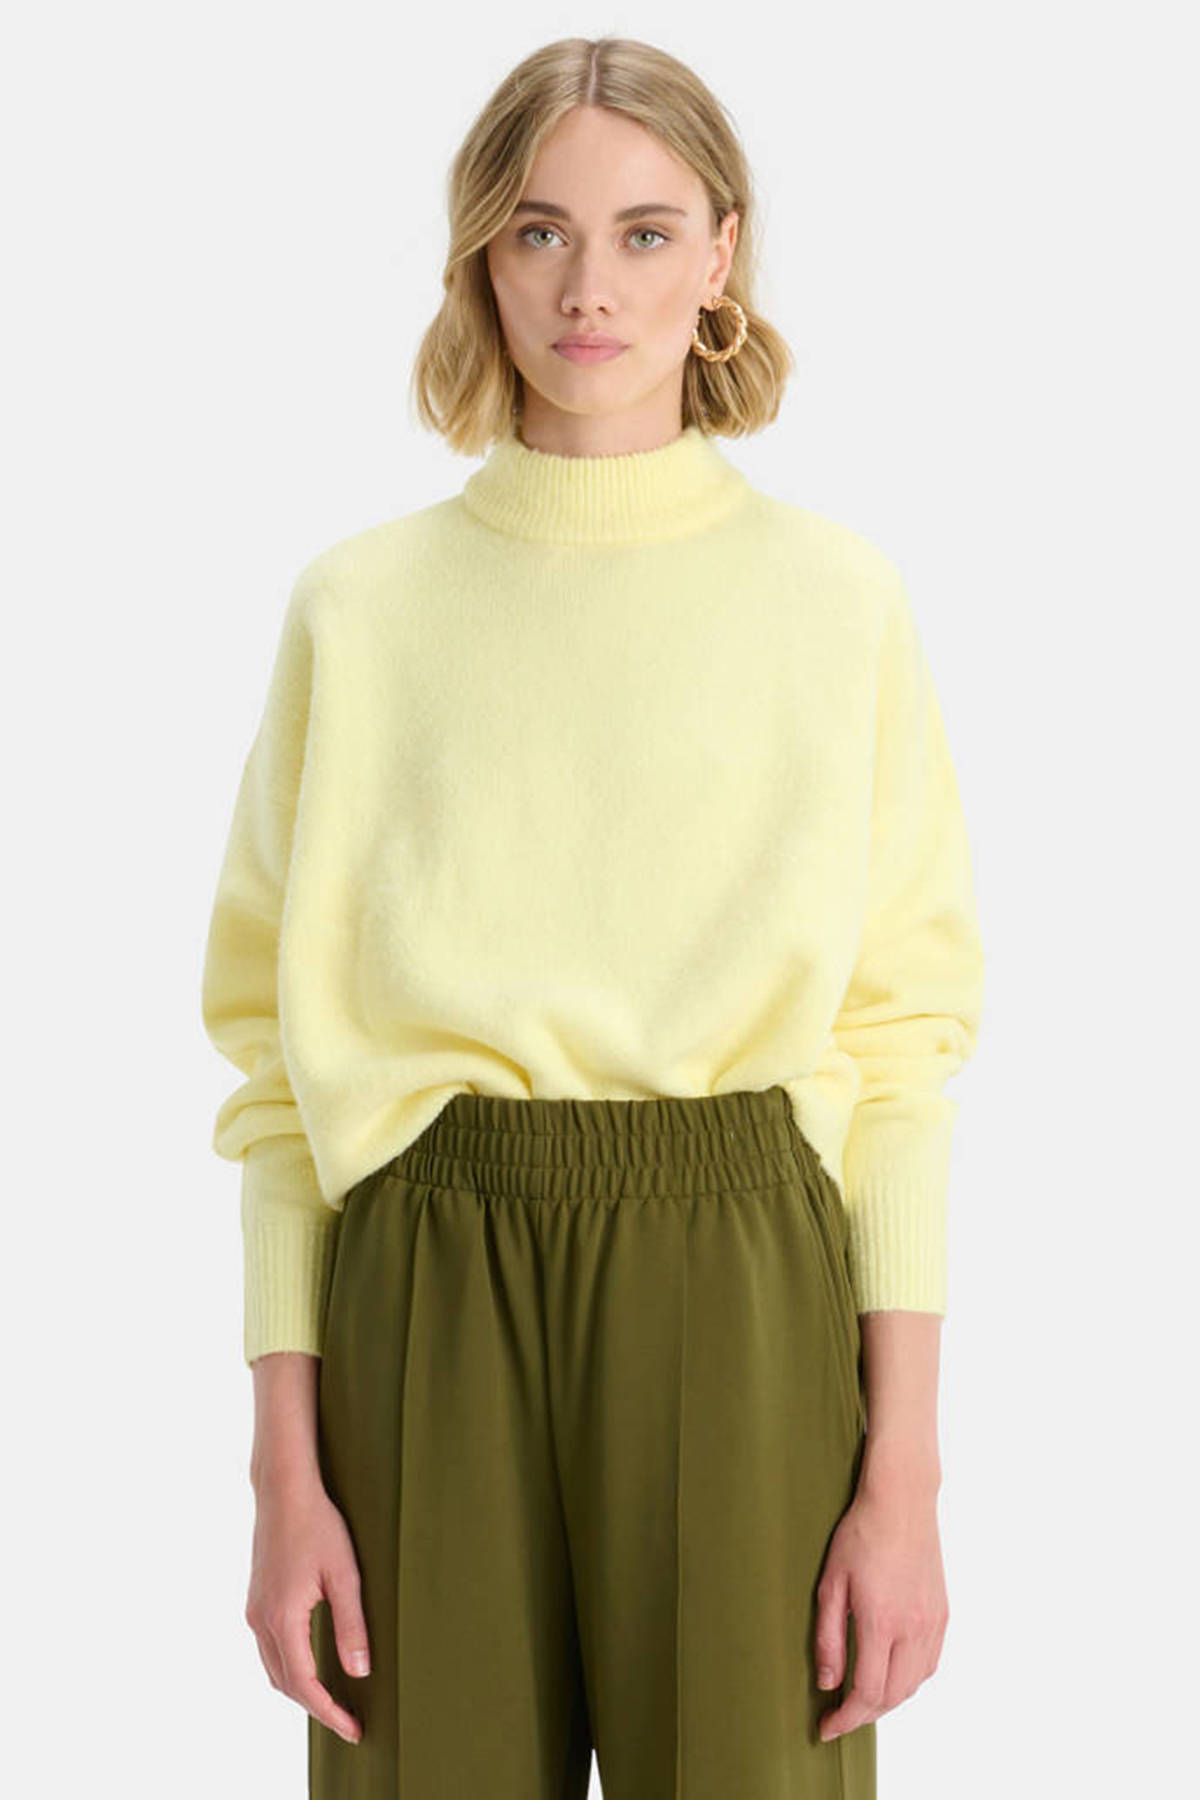 Kleding Dameskleding Sweaters Pullovers Gele Kabels Trui Angora 